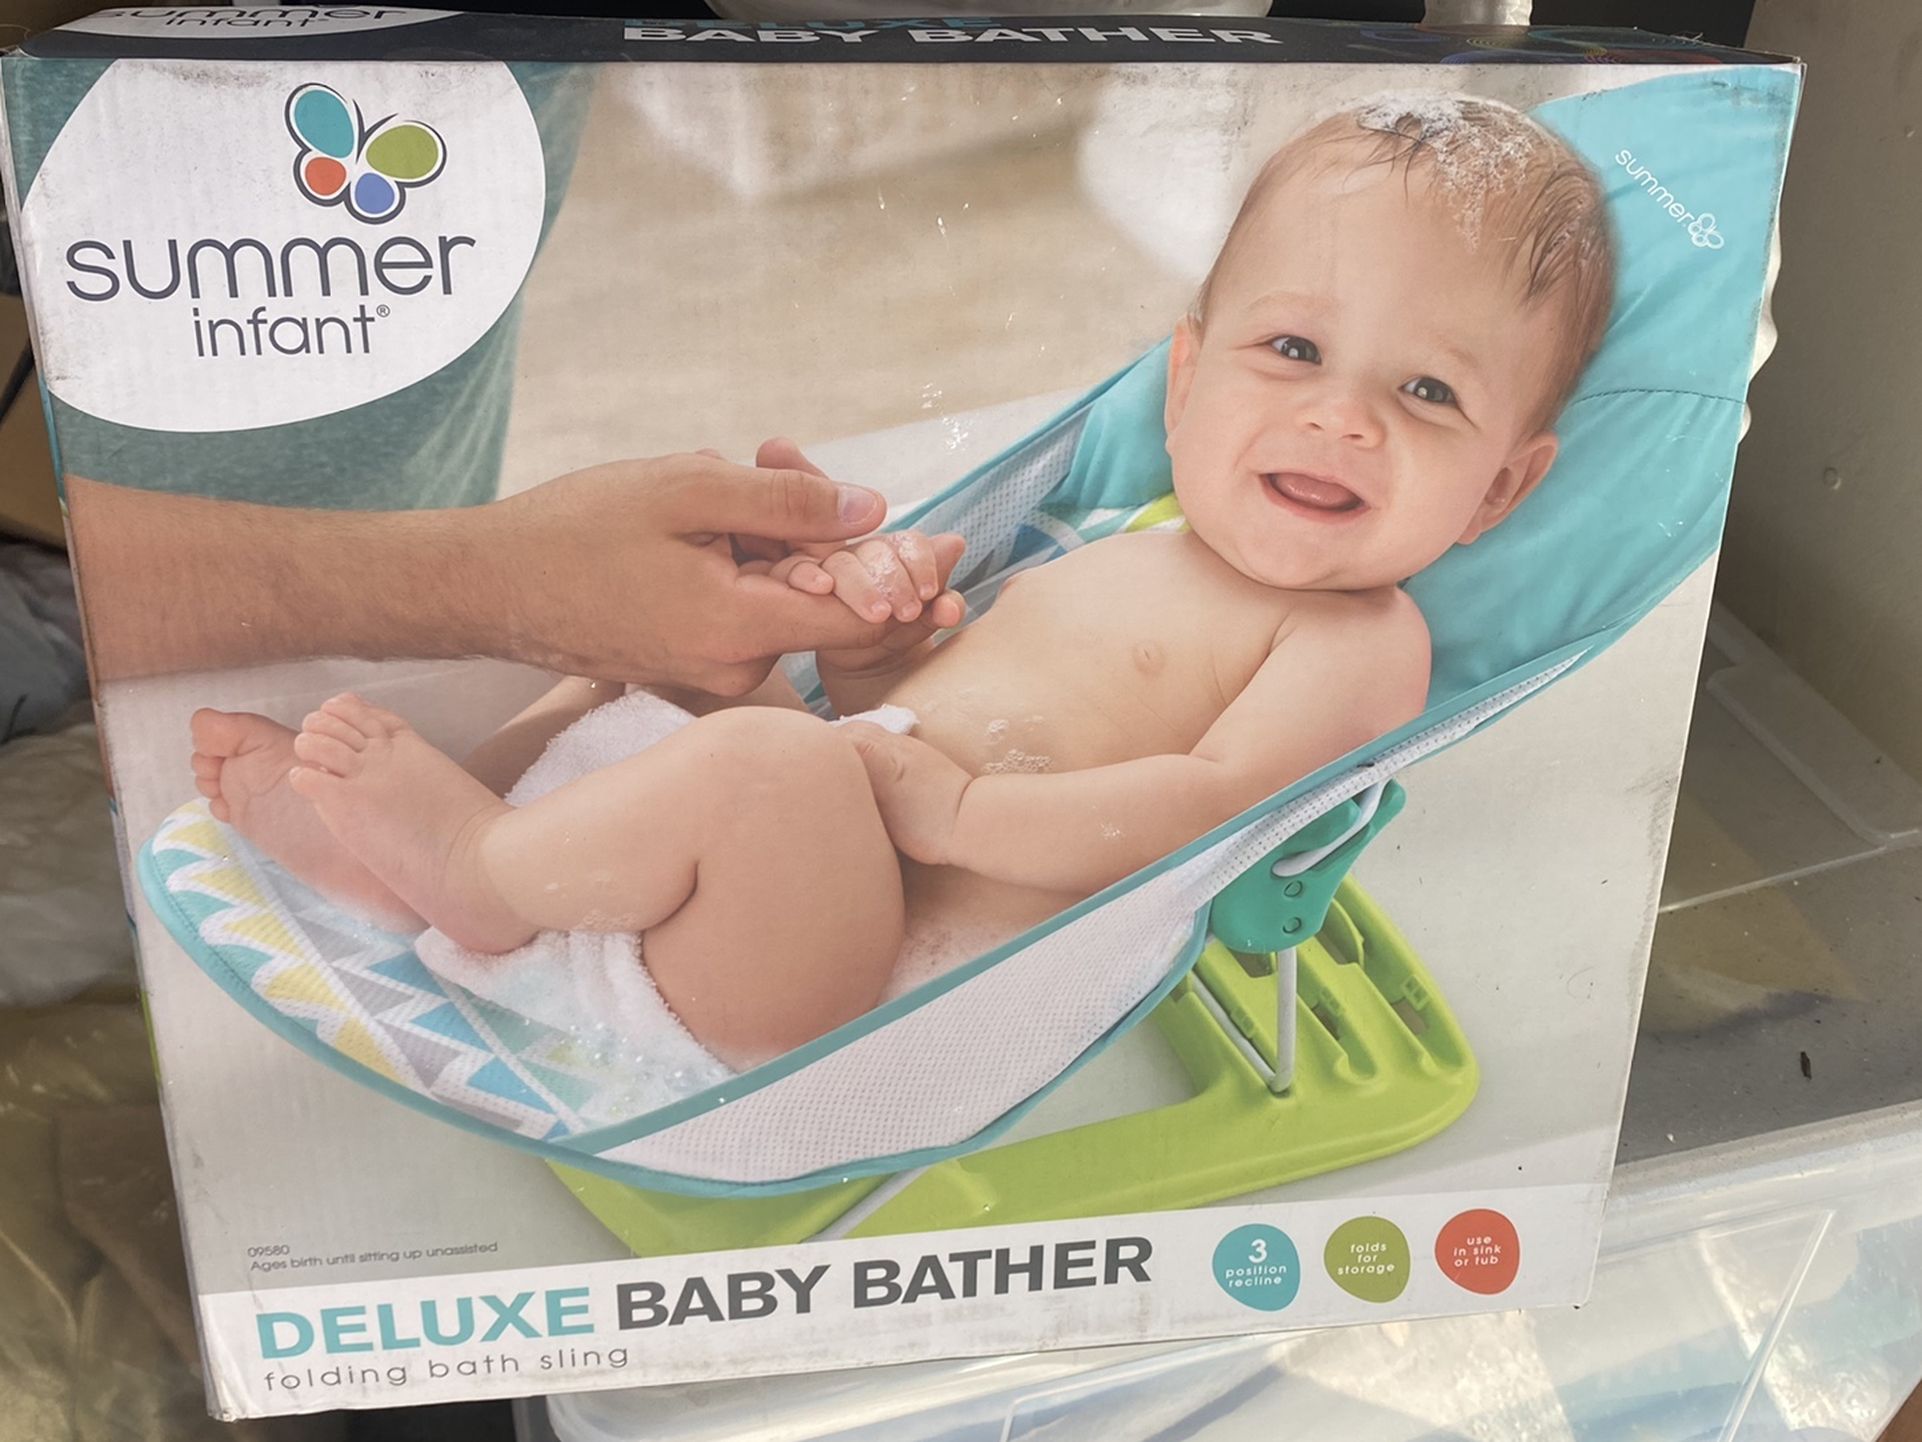 NEW!! Baby Bather